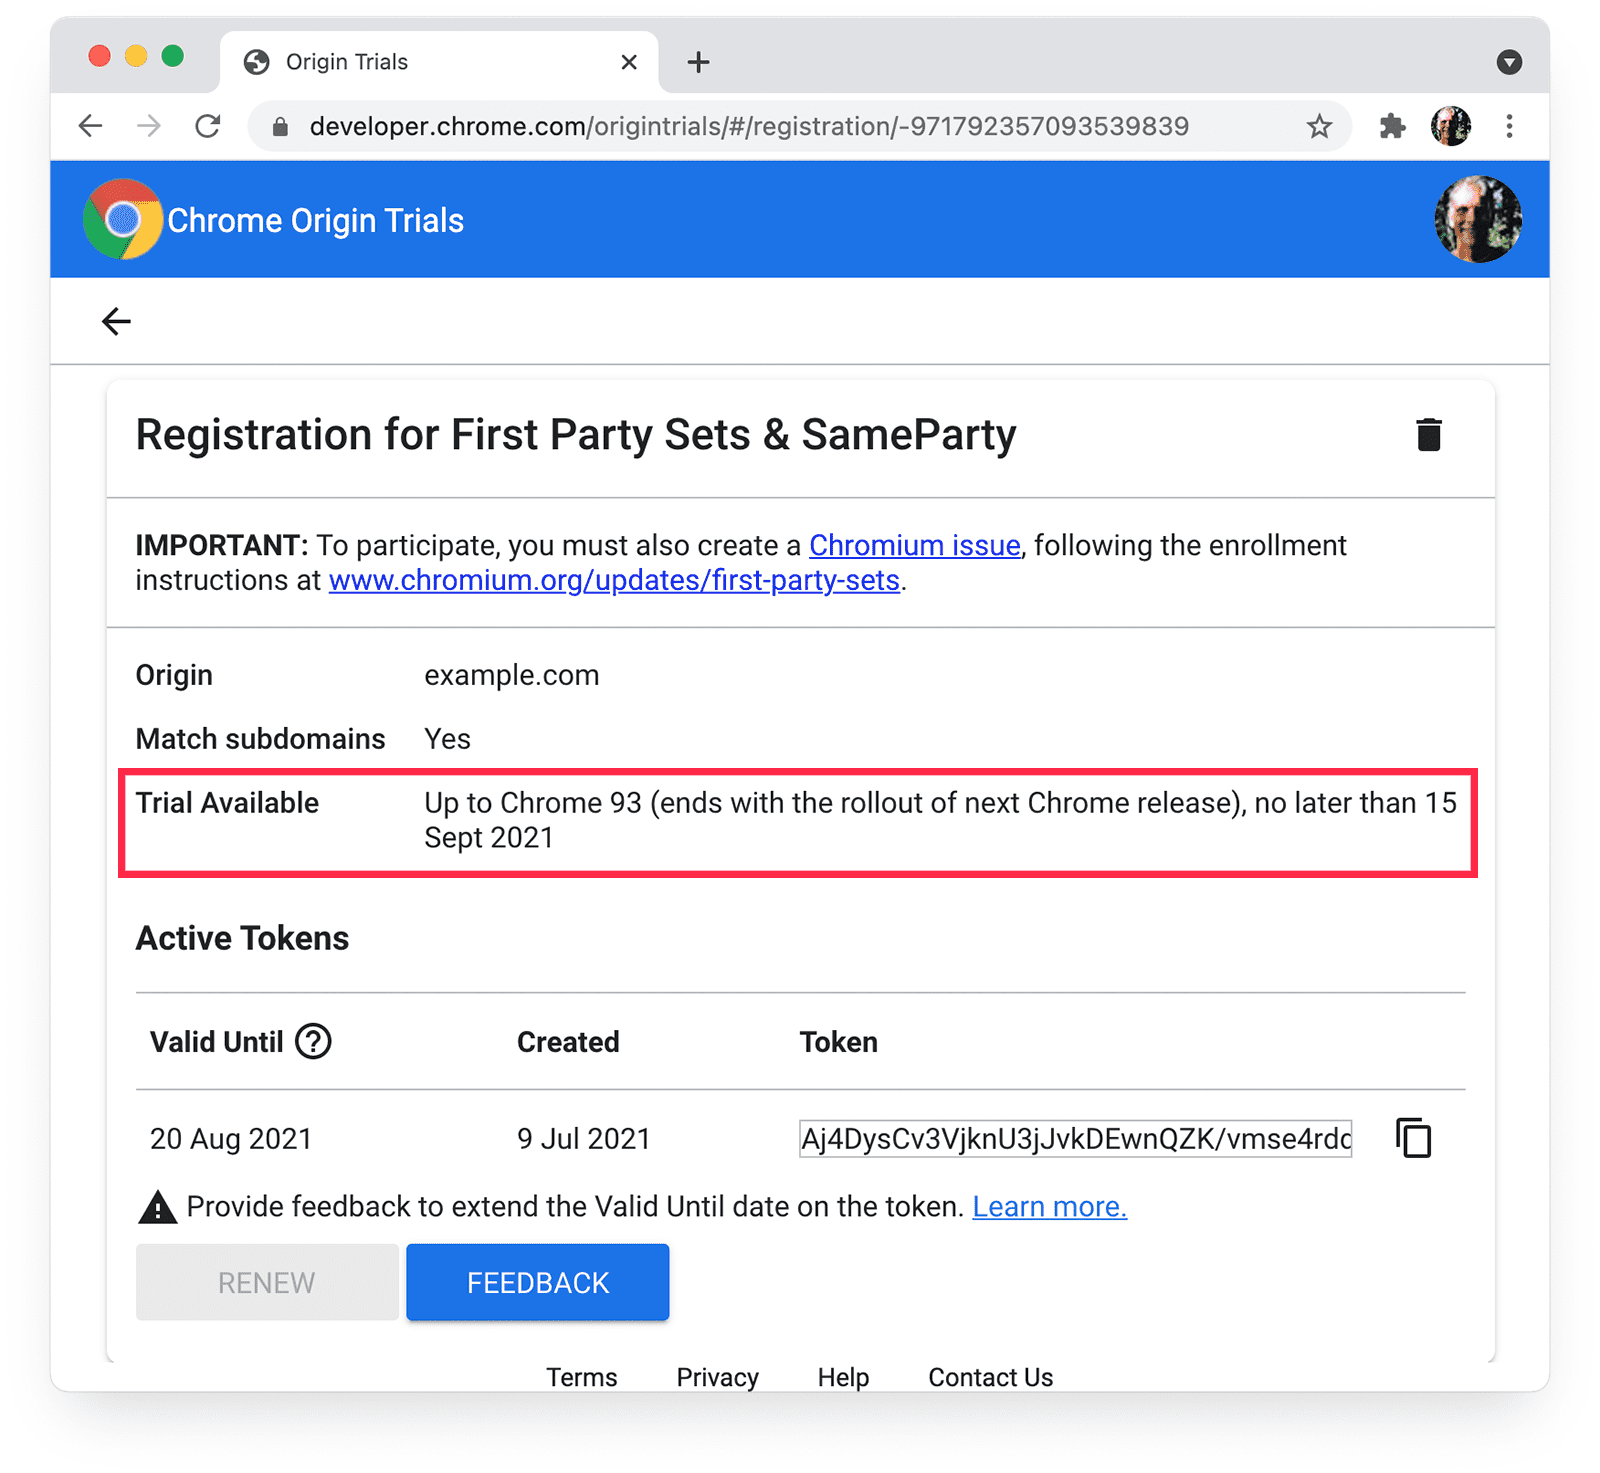 Chrome 源试用
“First Party Set”和SameParty，其中突出显示了可试用的详细信息。